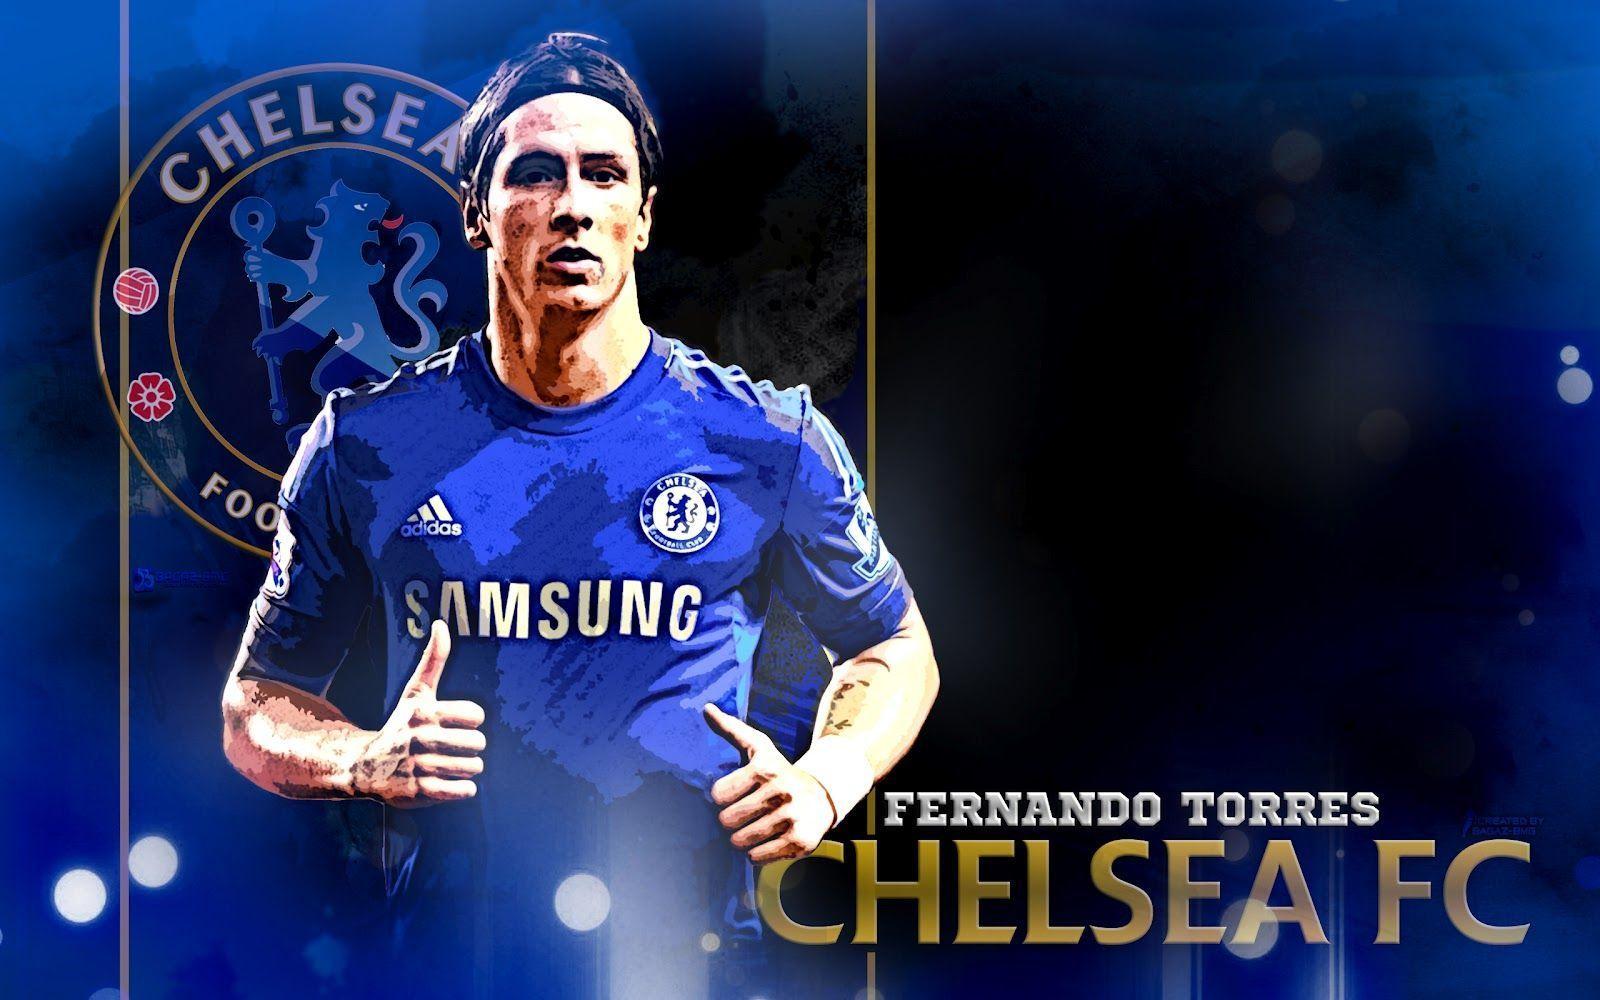 Fernando Torres Chelsea Fc 156522 Image. soccerwallpics